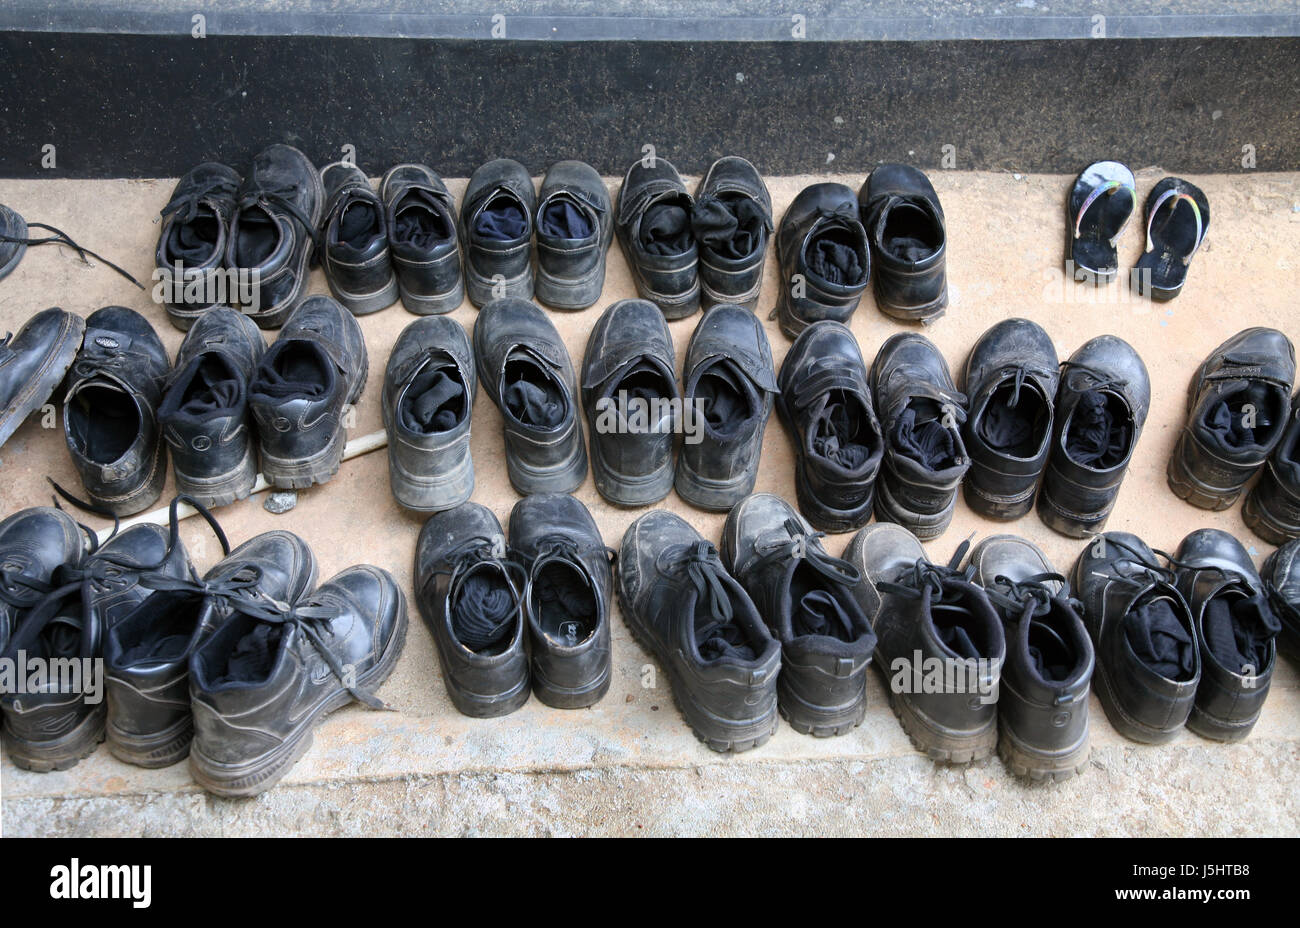 dust black swarthy jetblack deep black shoes mud ankle-strap sandal sandals Stock Photo